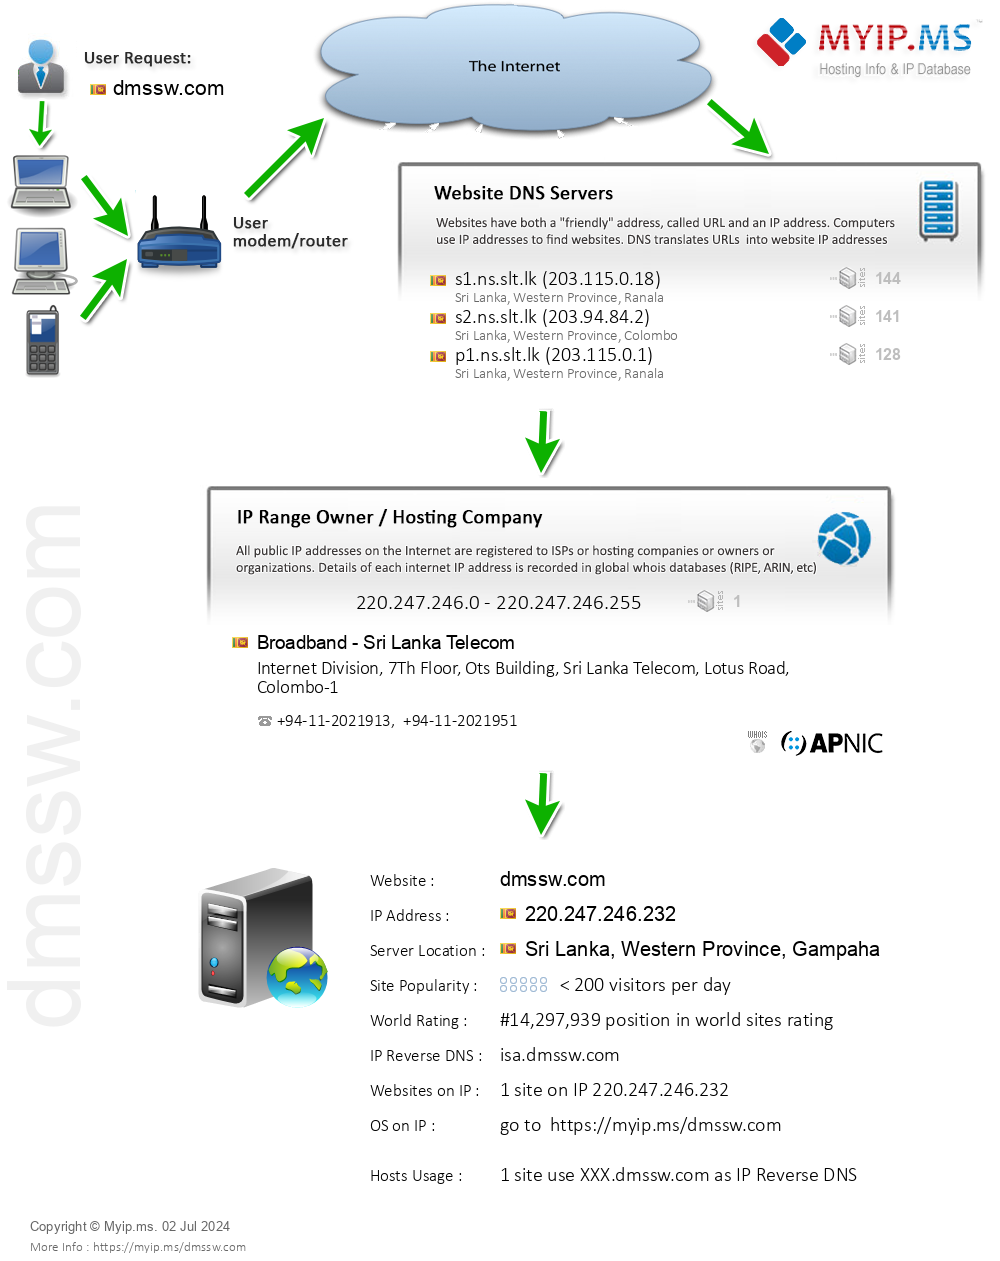 Dmssw.com - Website Hosting Visual IP Diagram